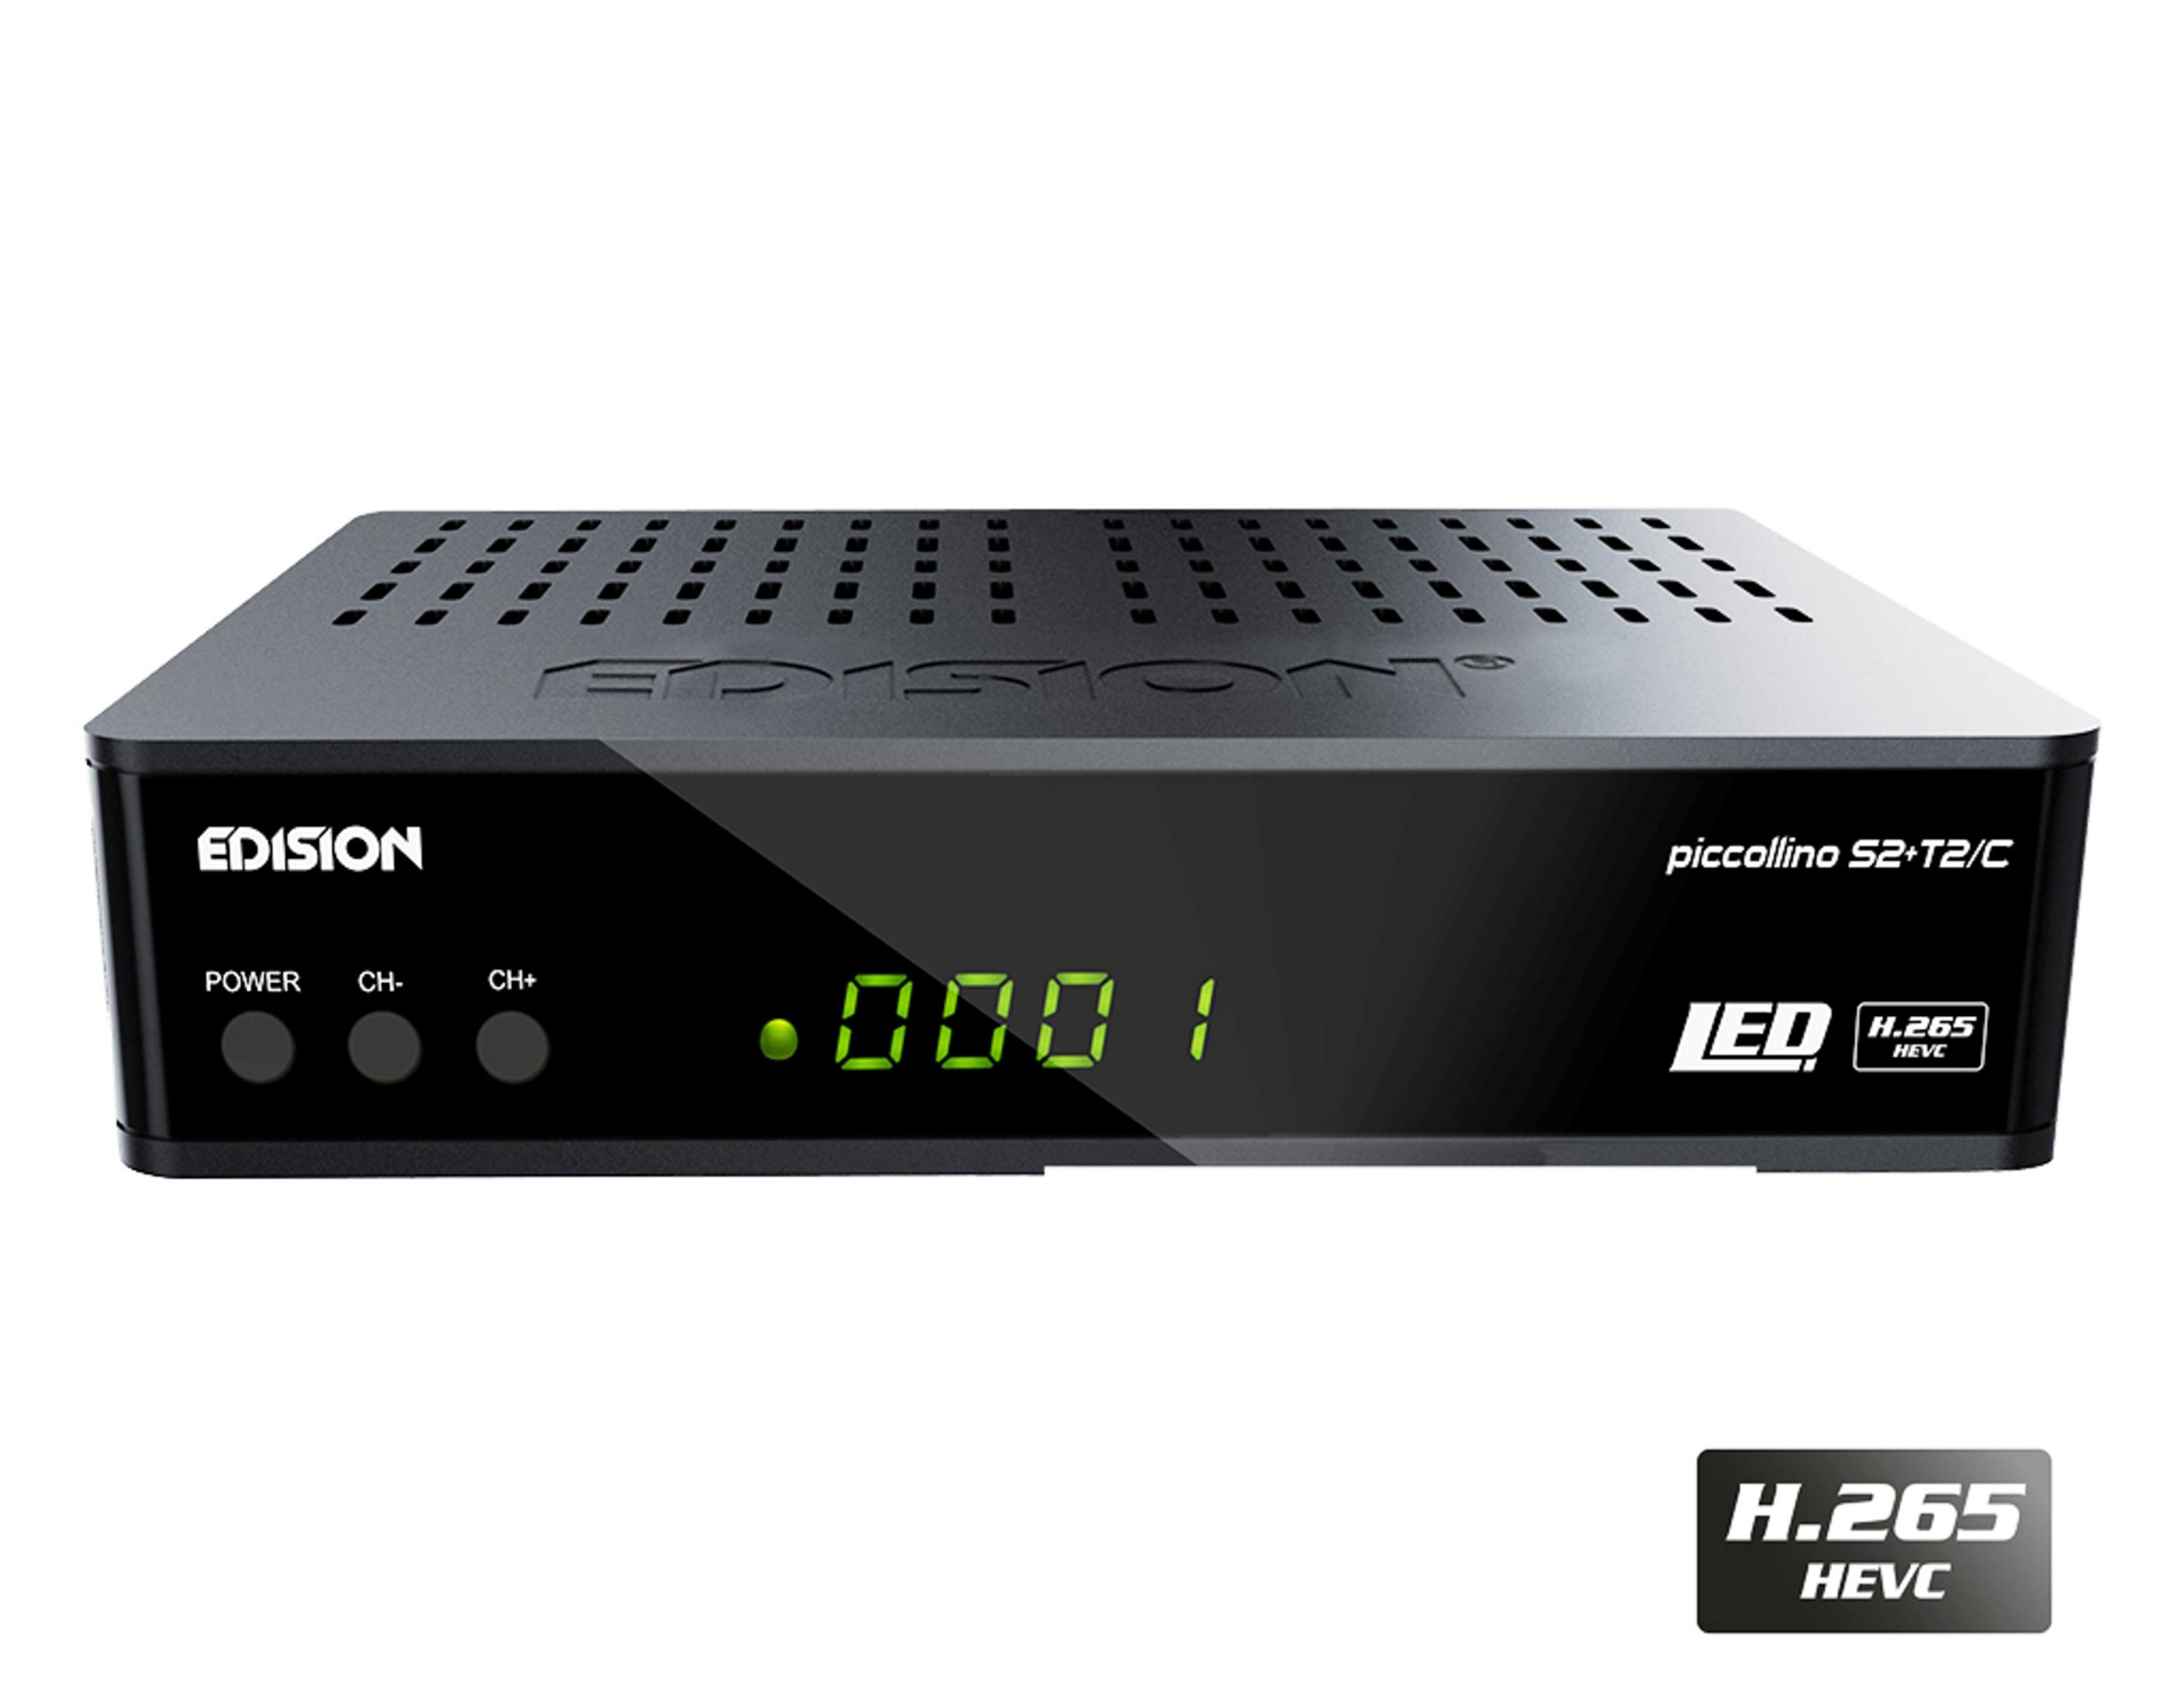 EDISION PICOLLINO (HDTV, PVR-Funktion, DVB-S, Tuner, DVB-T, DVB-S2, DVB-C2, LED Twin DVB-S2 3in1 DVB-T2 HD (H.265), Schwarz) Receiver DVB-C, DVB-T2/C HEVC